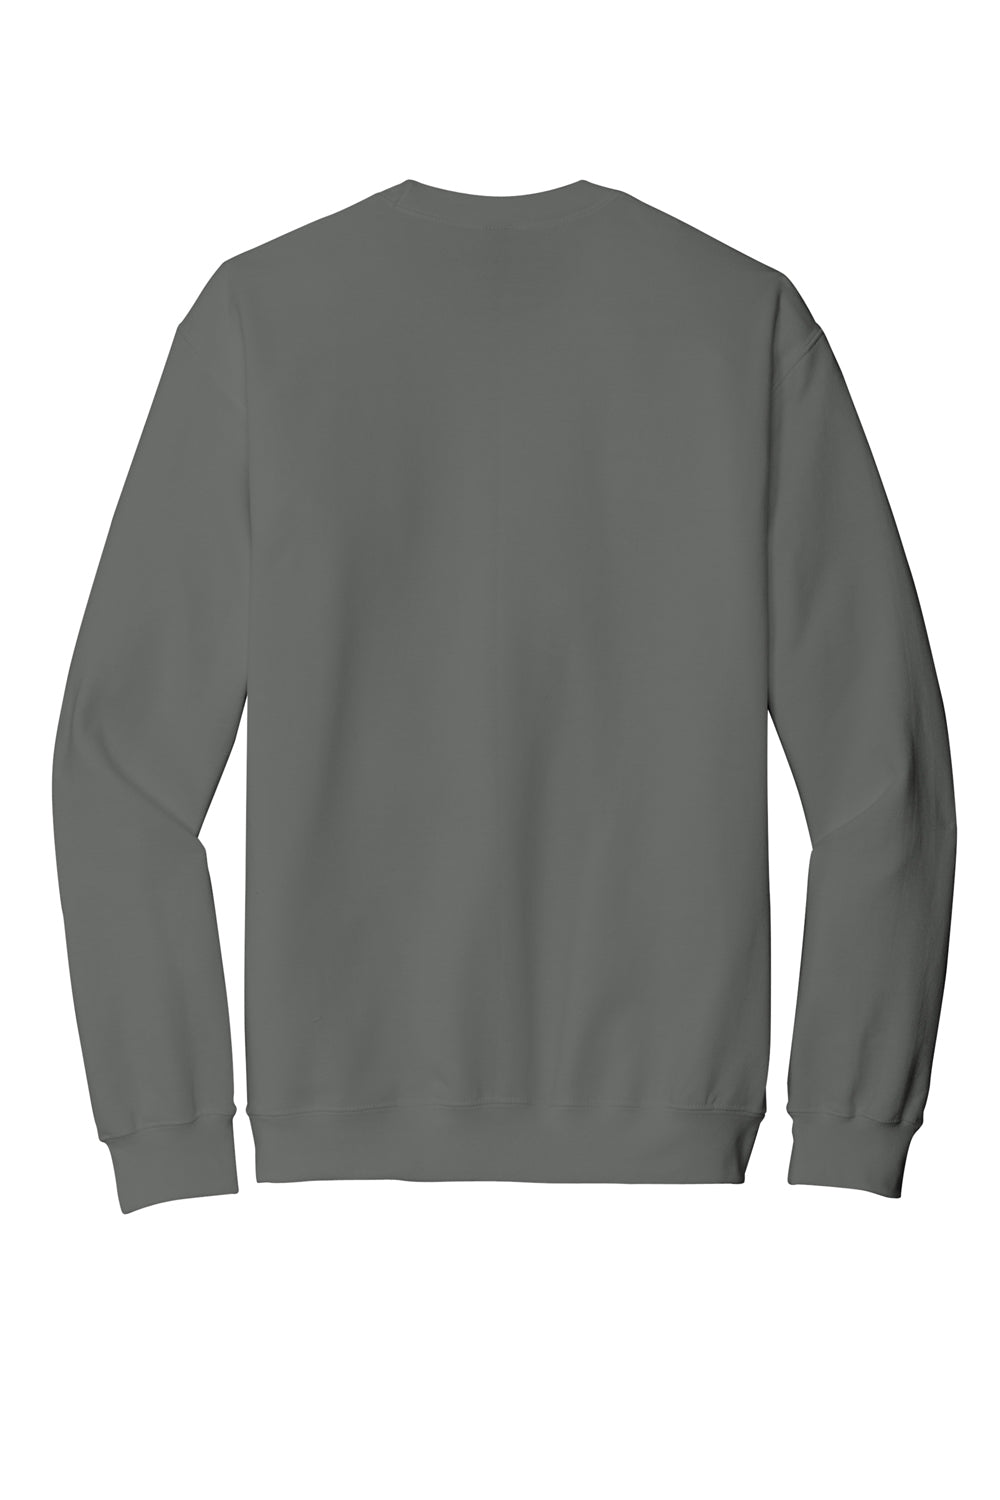 Gildan SF000 Softstyle Crewneck Sweatshirt Charcoal Grey Flat Back